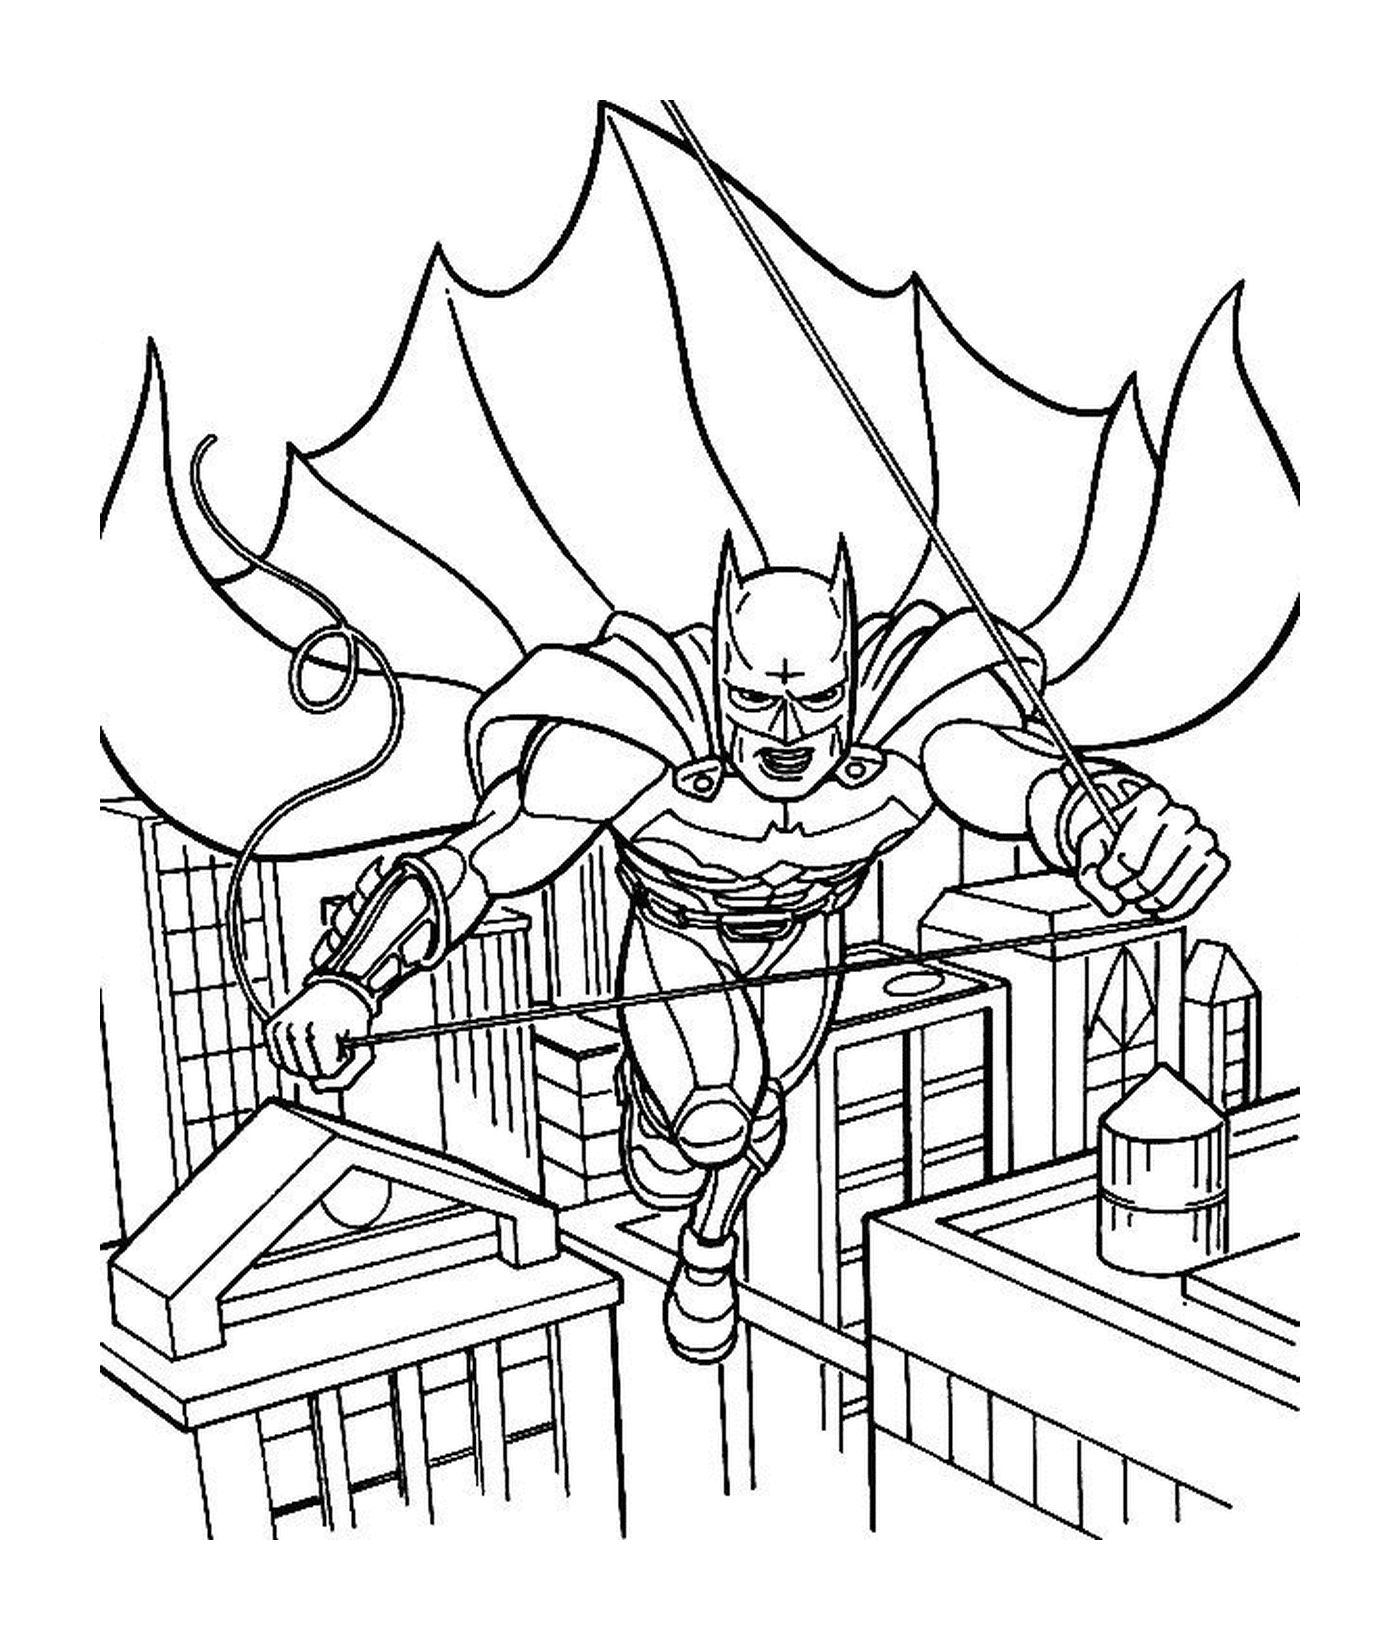  Batman flying in the air 